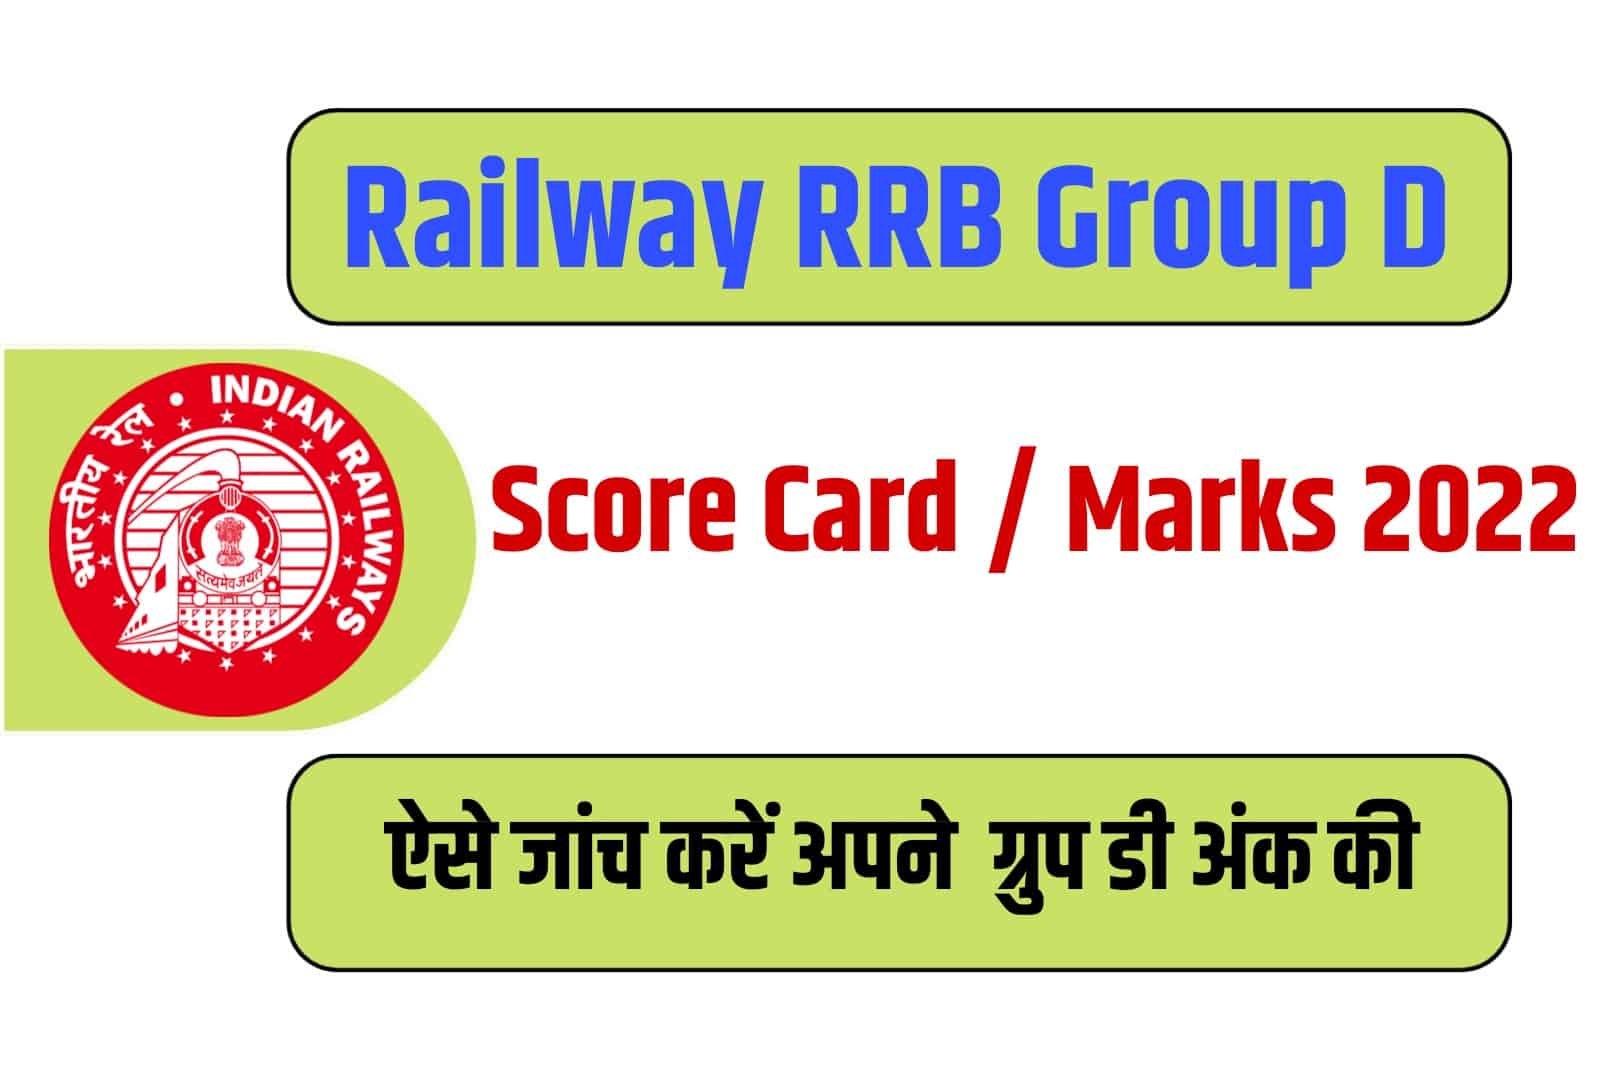 Railway RRB Group D Score Card / Marks 2022 | रेलवे ग्रुप डी स्कोर कार्ड